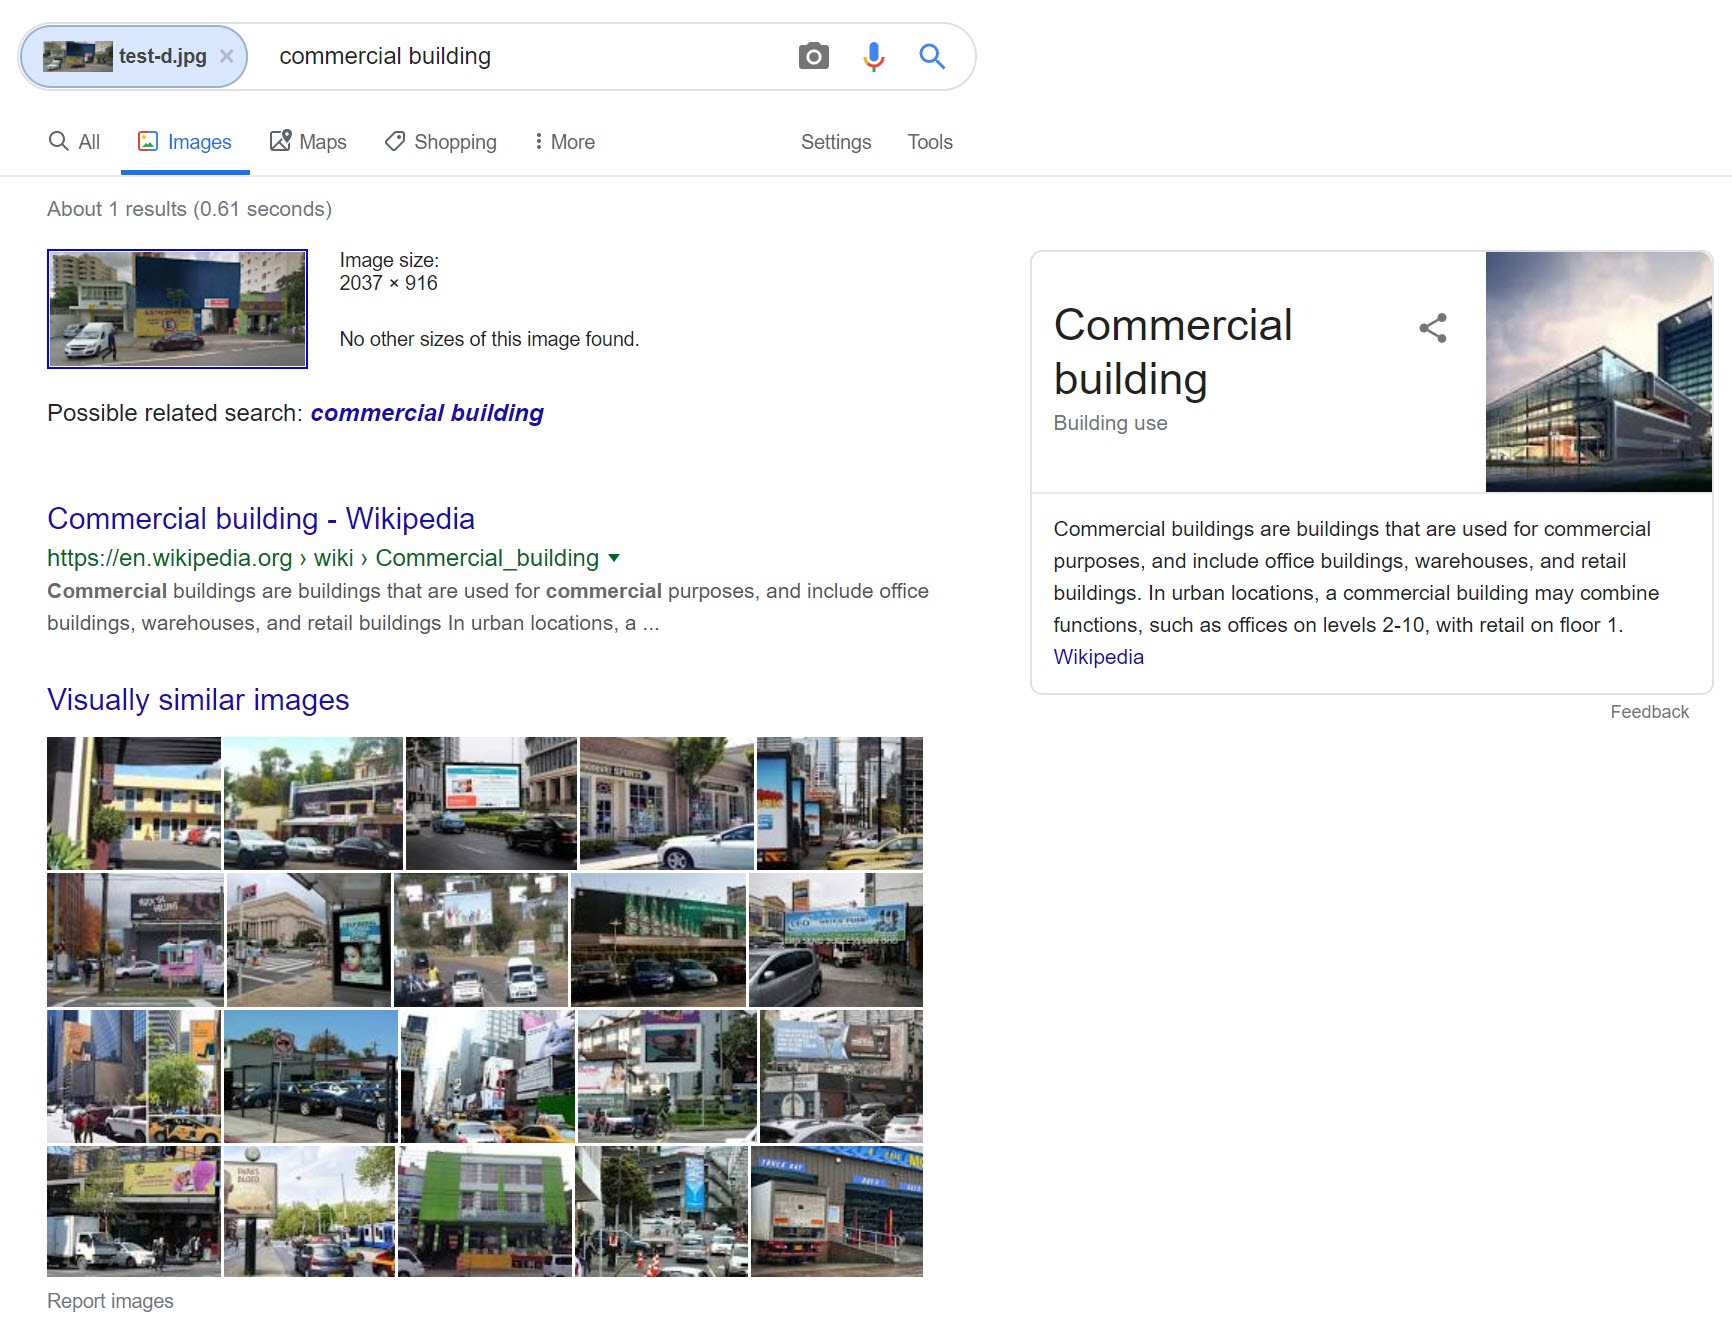 Reverse Image Search: Verifying photos. - Google News Initiative